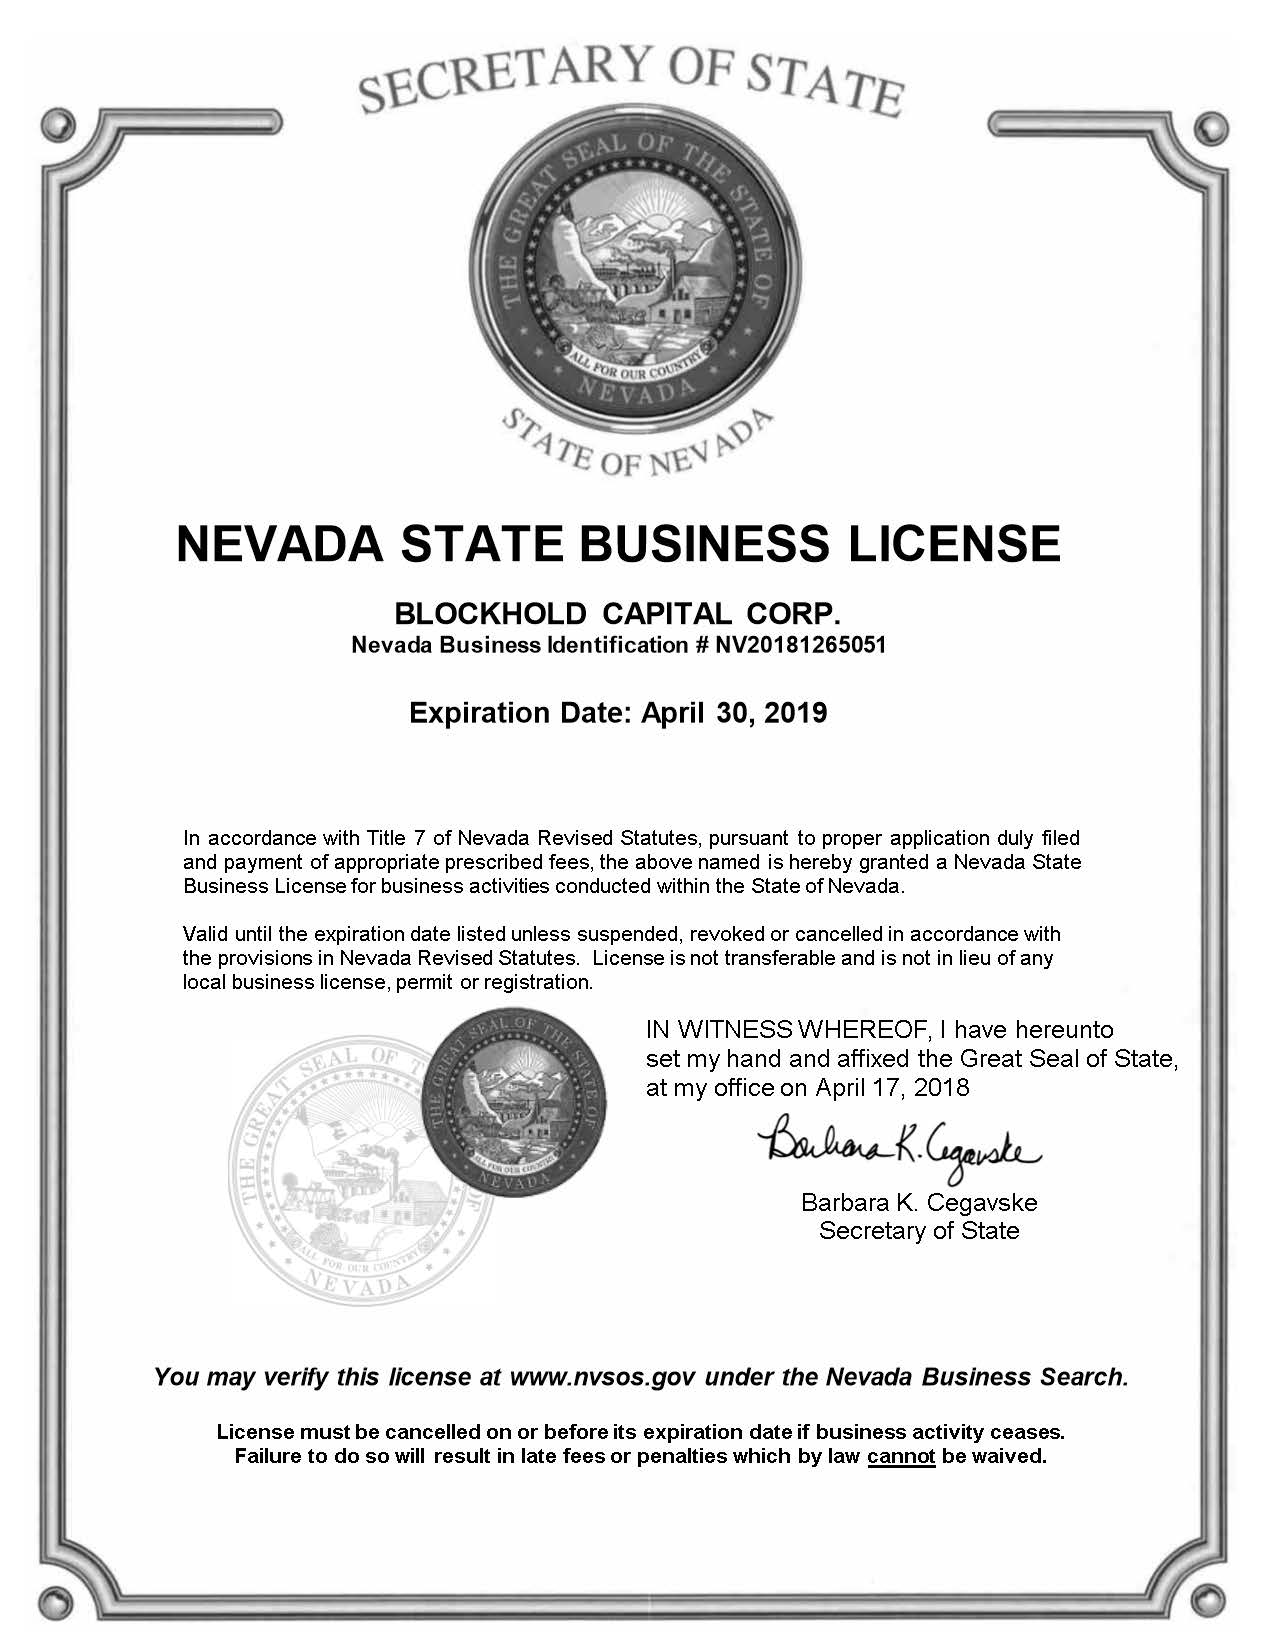 File stamped Merger - Nevada_Page_12.jpg